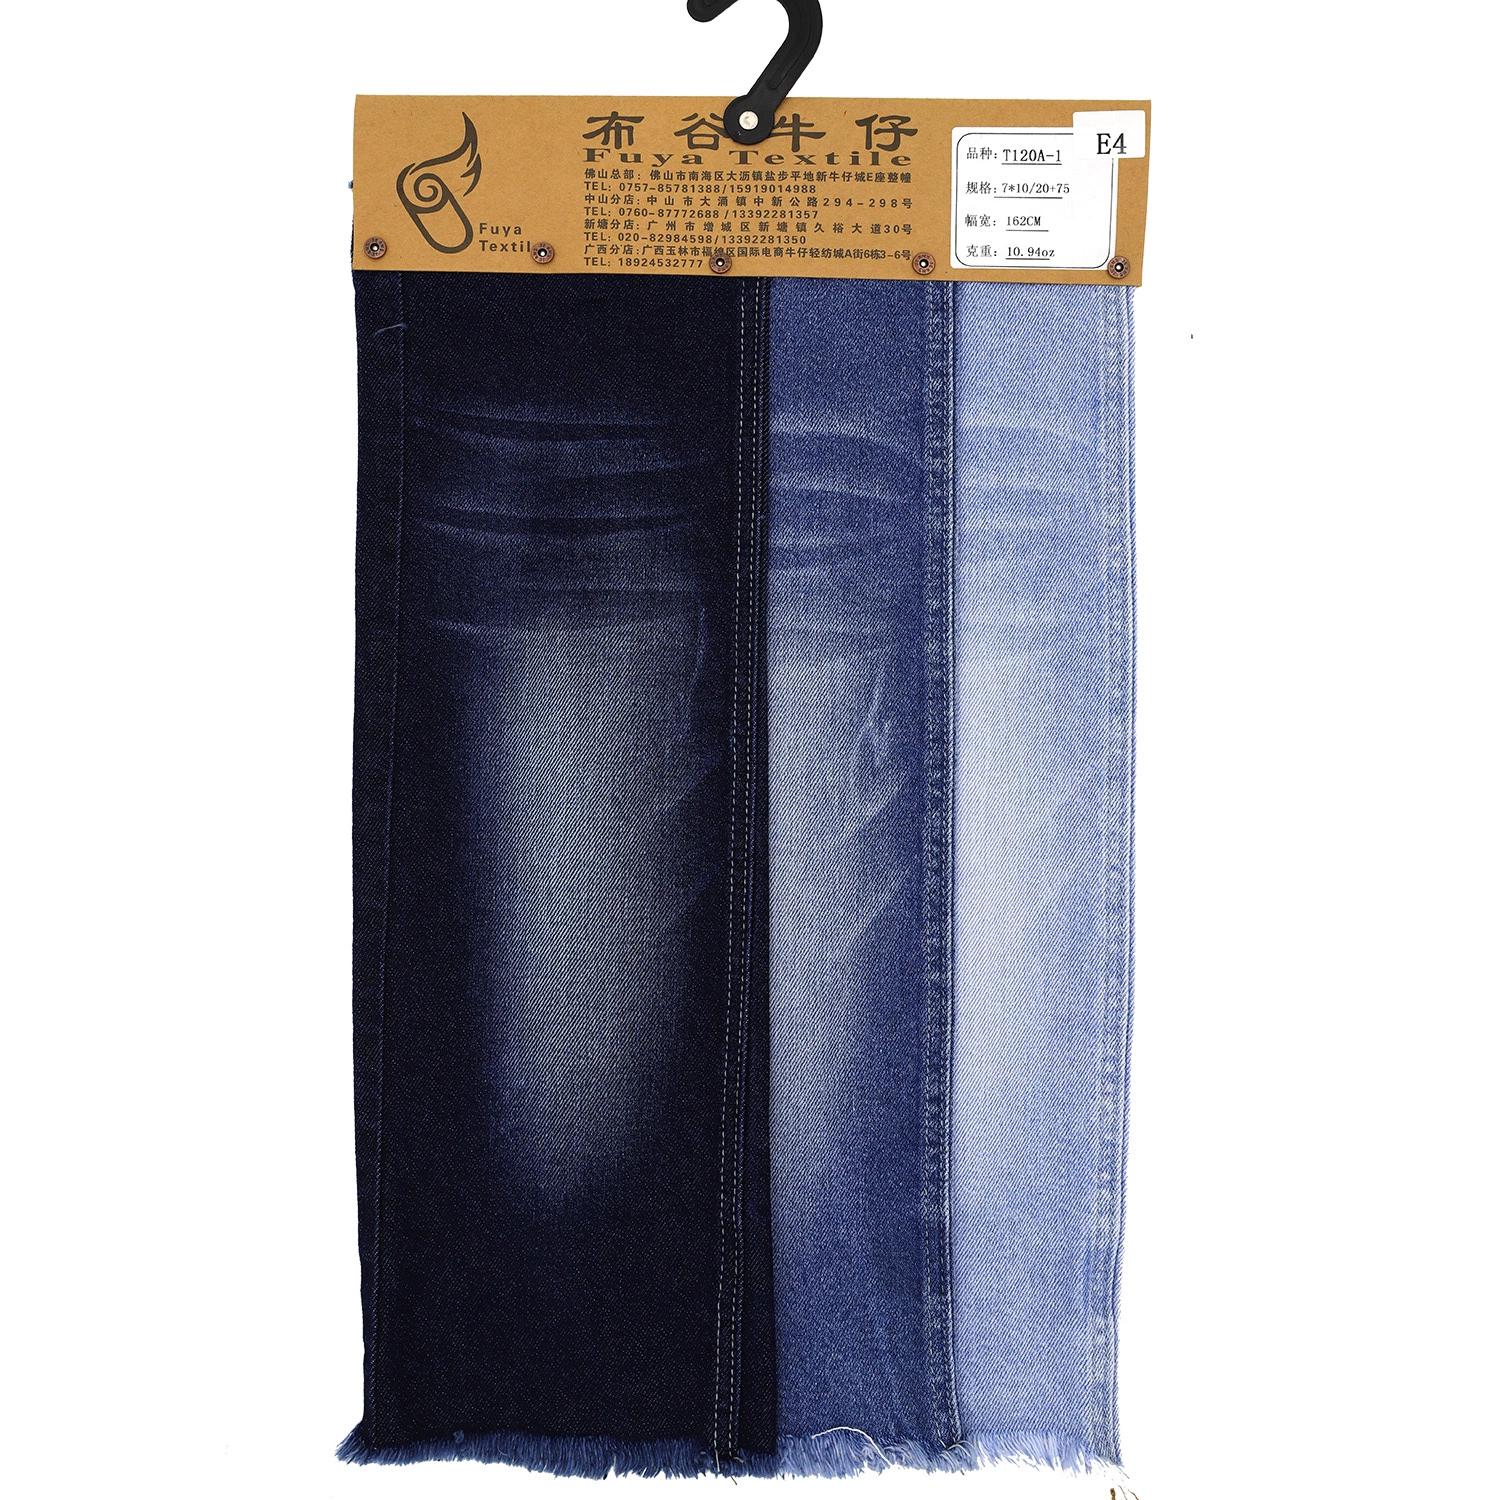 T120A-1 sky blue 10oz denim fabric stretchable with spandex